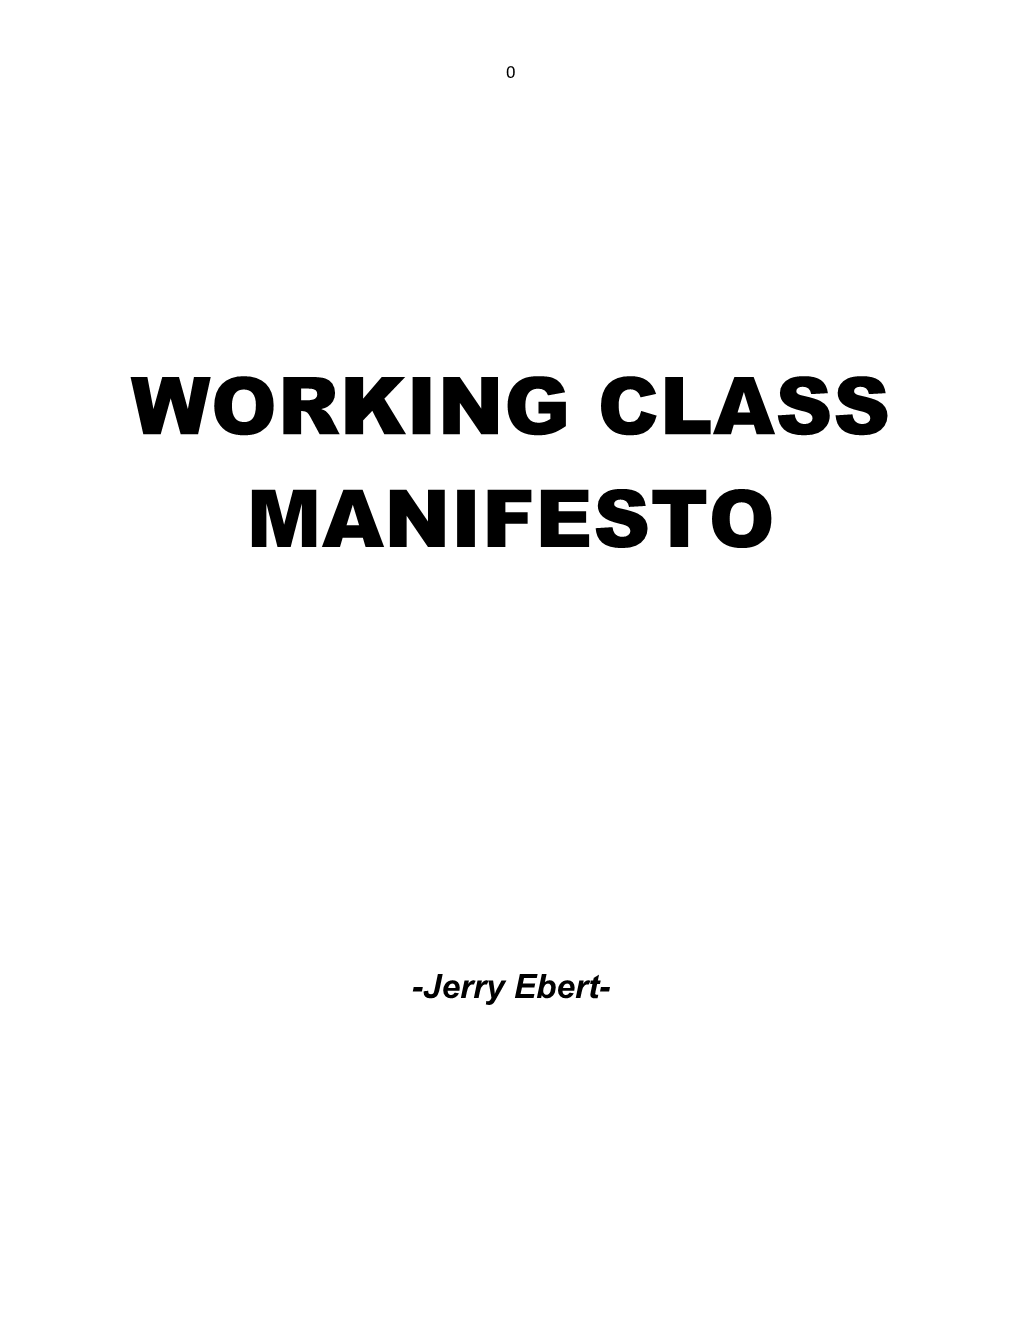 Working Class Manifesto